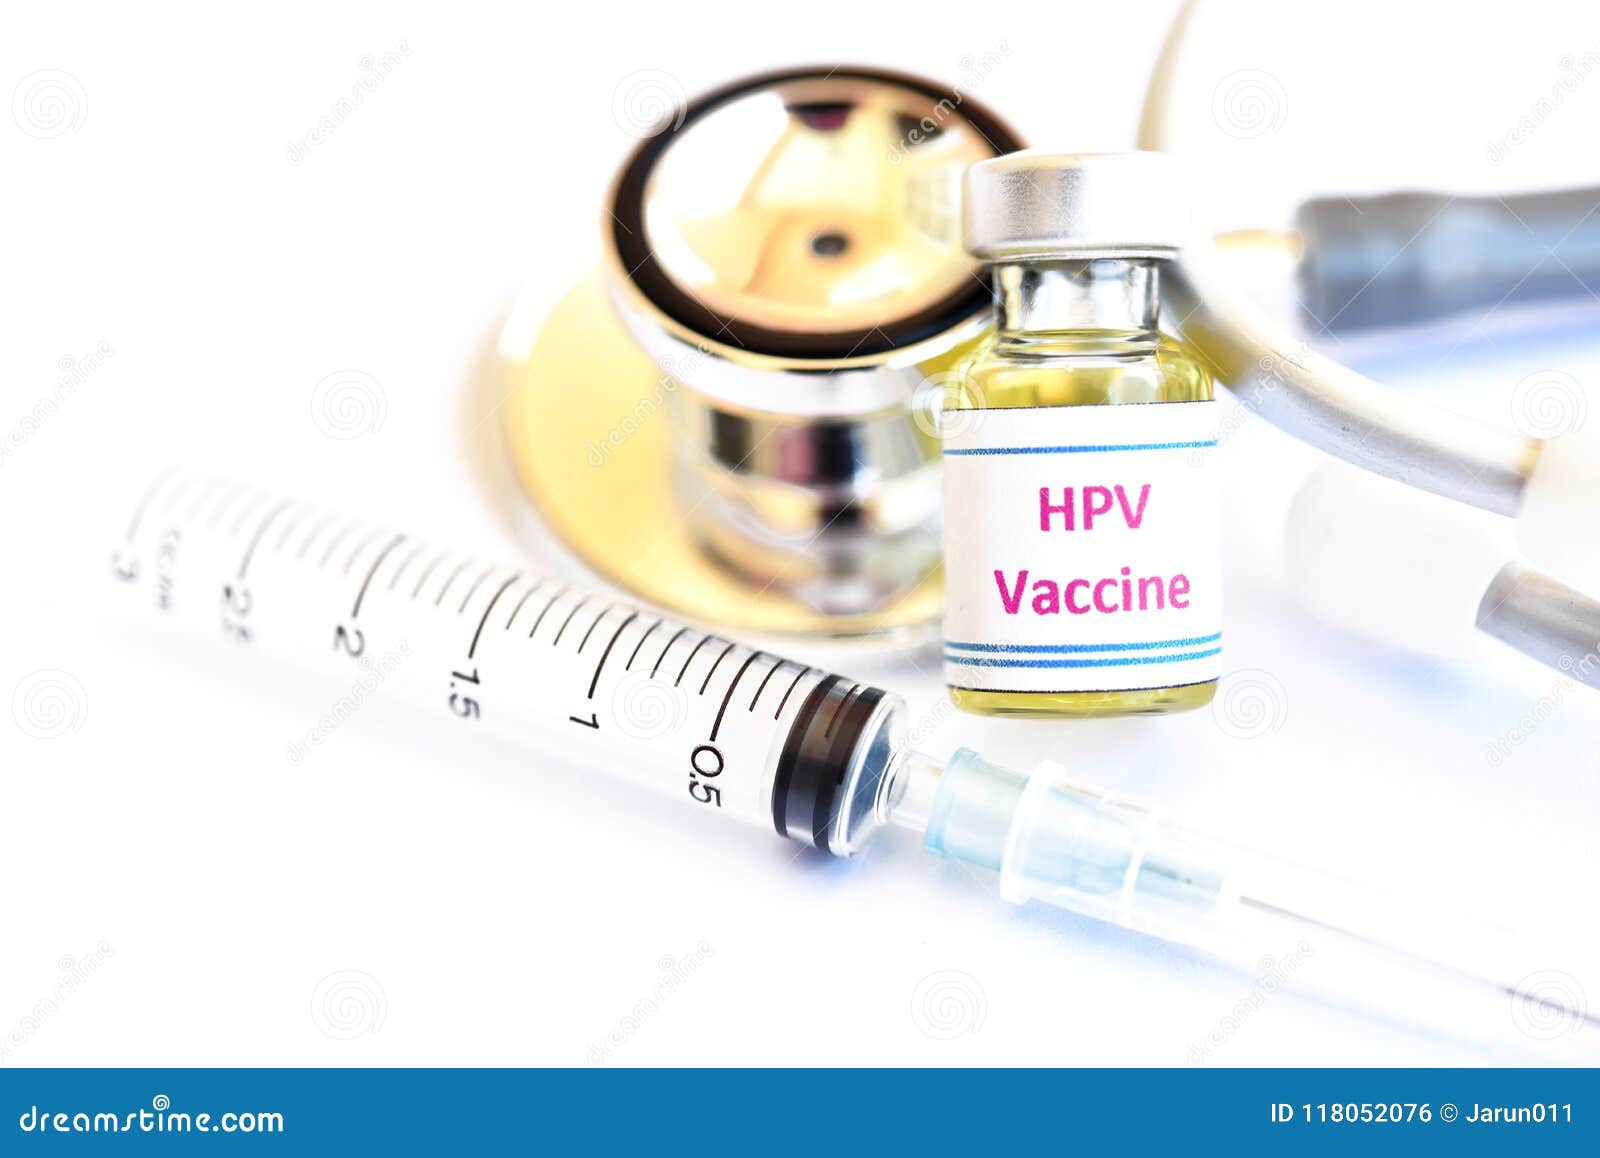 hpv vaccine medicine